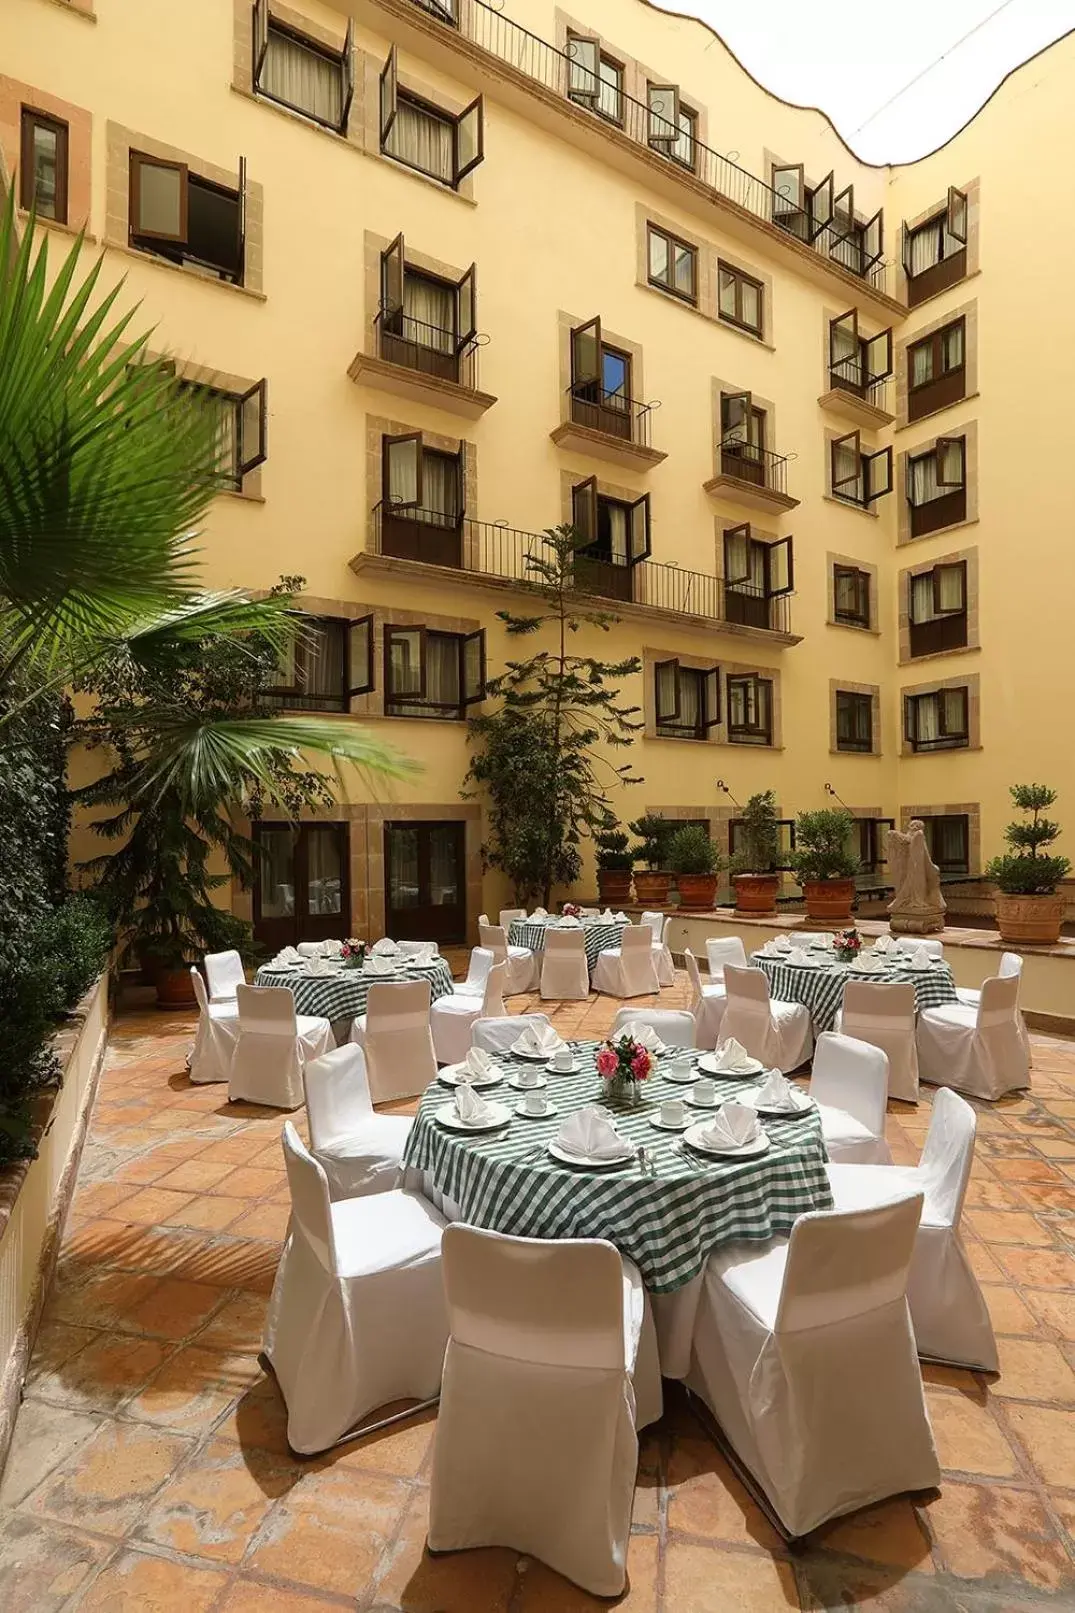 Banquet/Function facilities, Restaurant/Places to Eat in Emporio Zacatecas